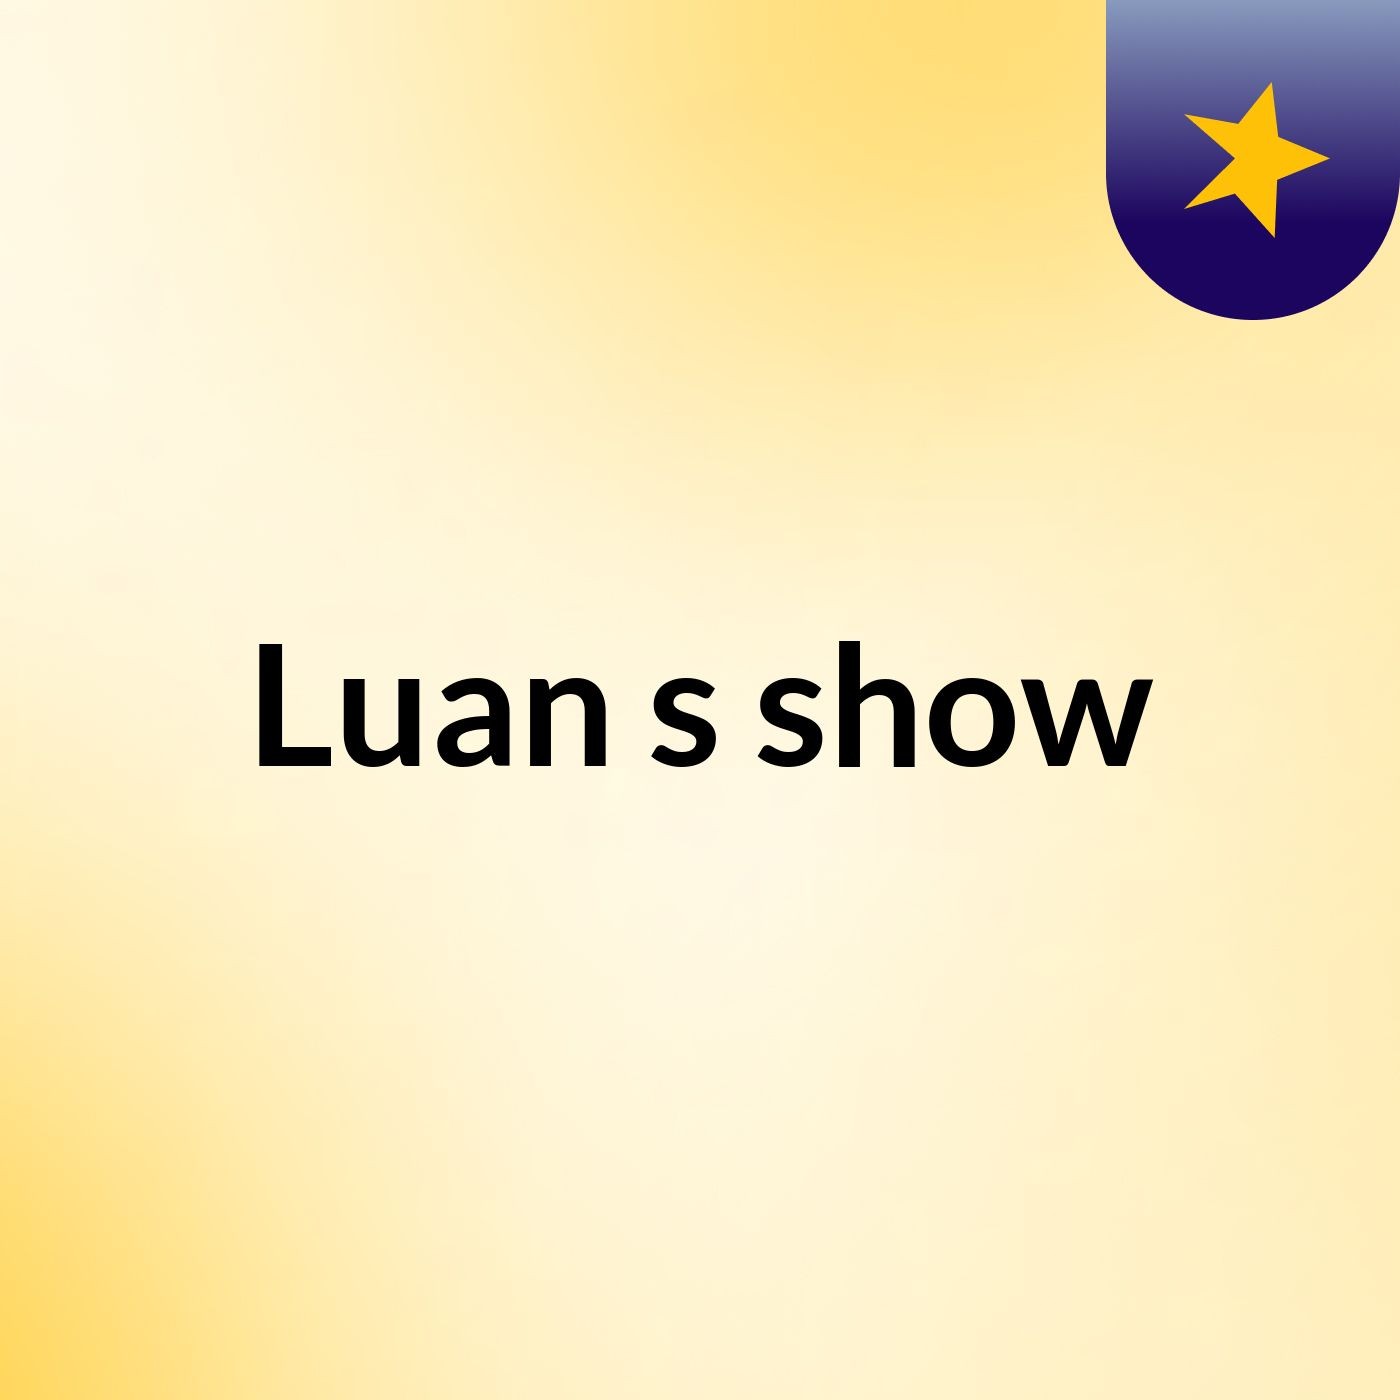 Luan's show